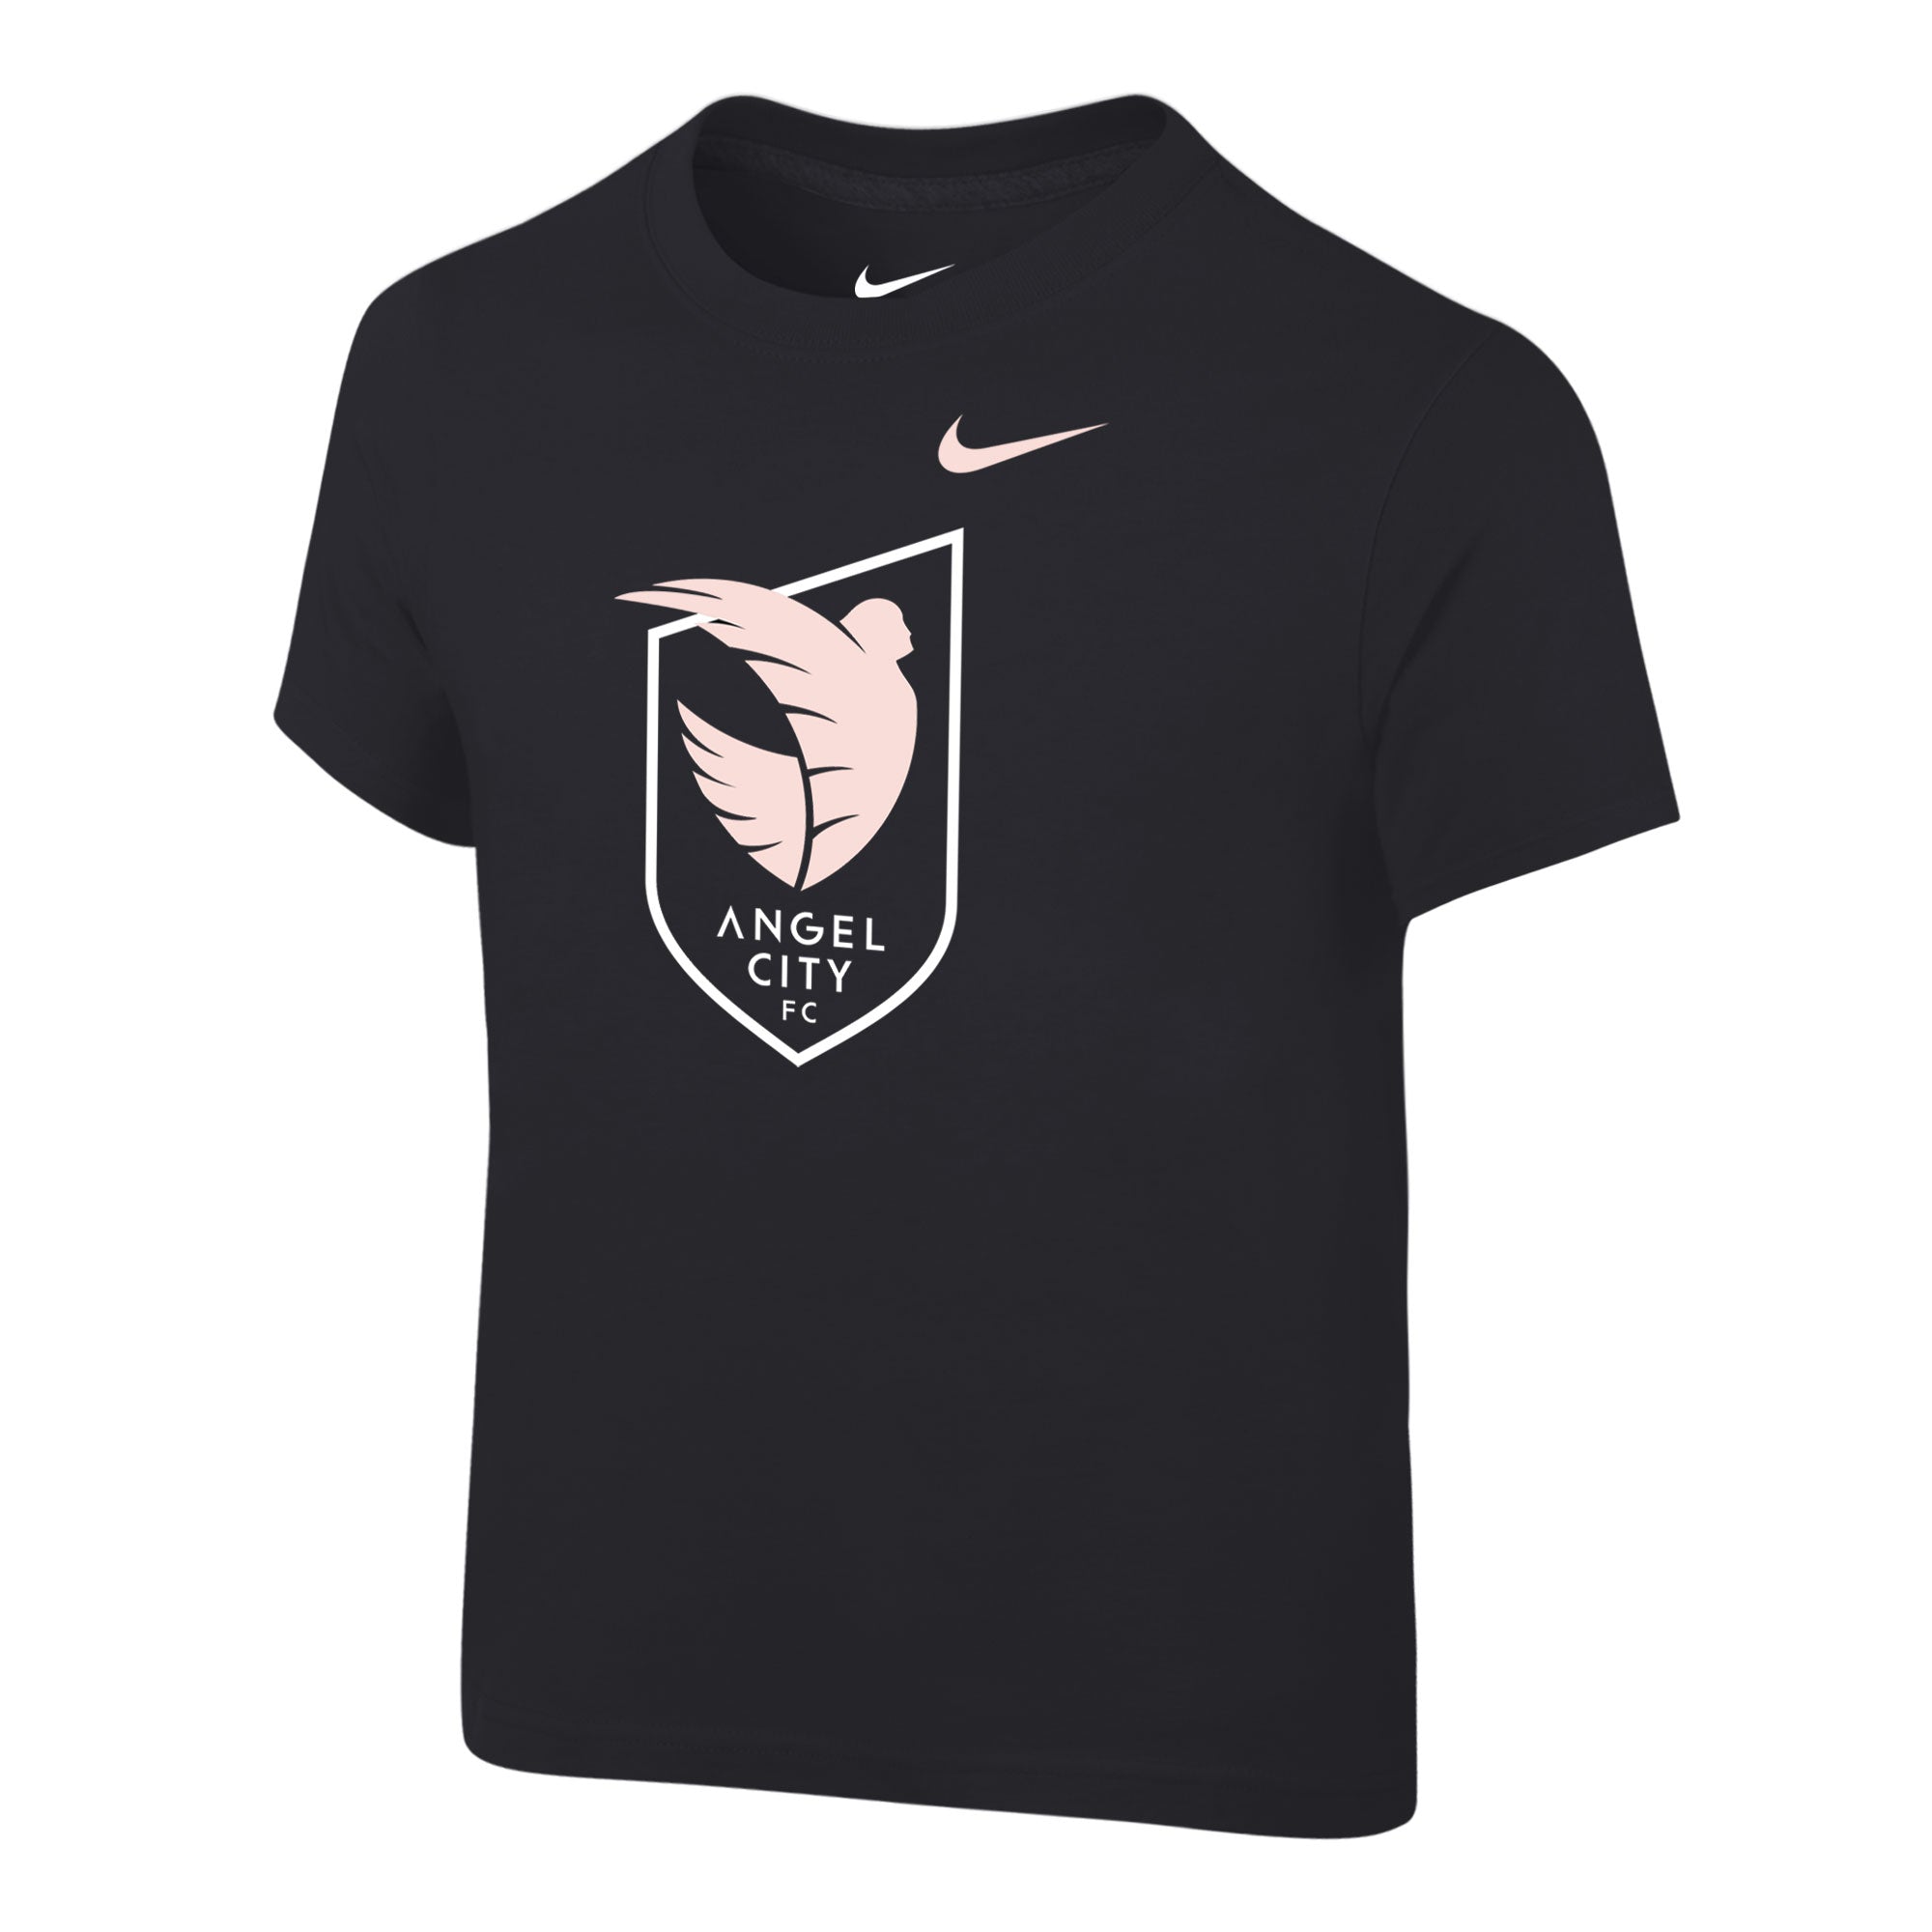 Angel City FC Nike - Camiseta de manga corta negra con escudo Sol Rosa para niños pequeños